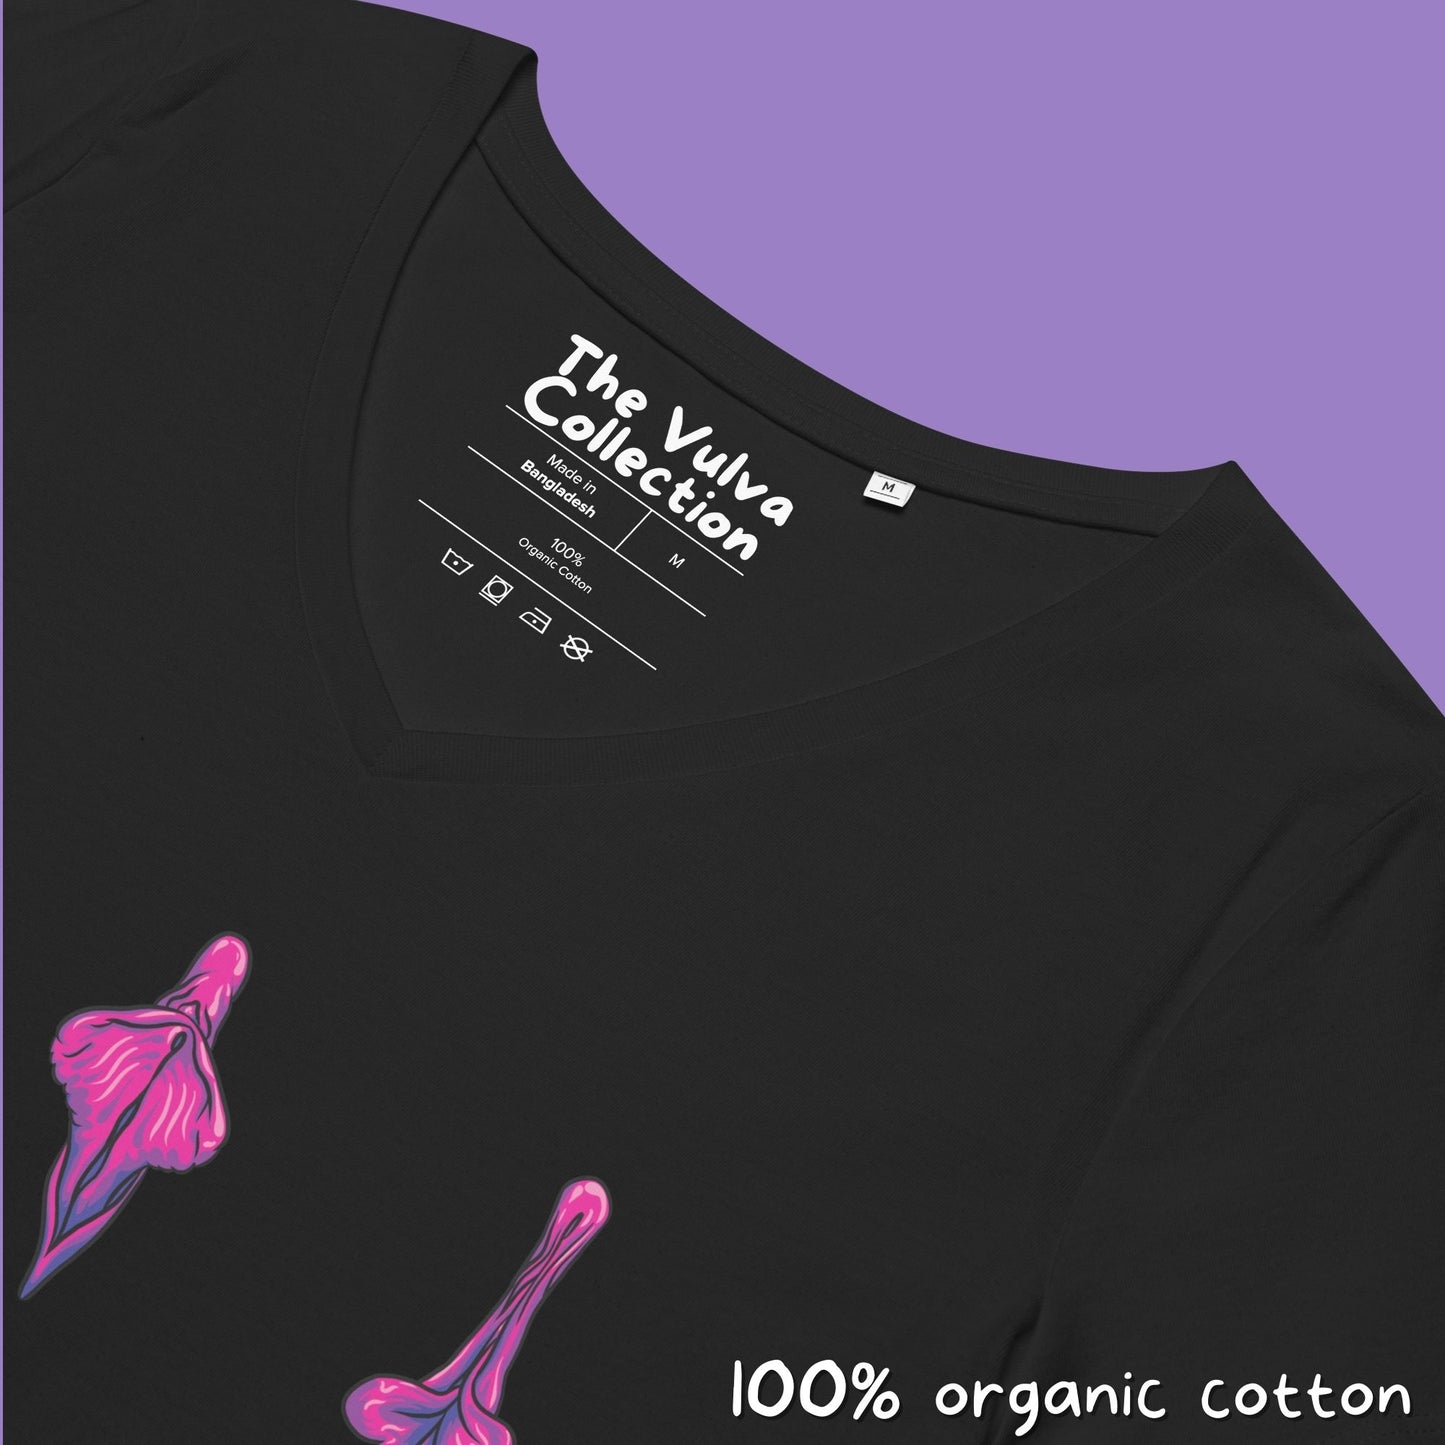 Vulva T-Shirt "My Friends And I" Pink Organic V-Neck